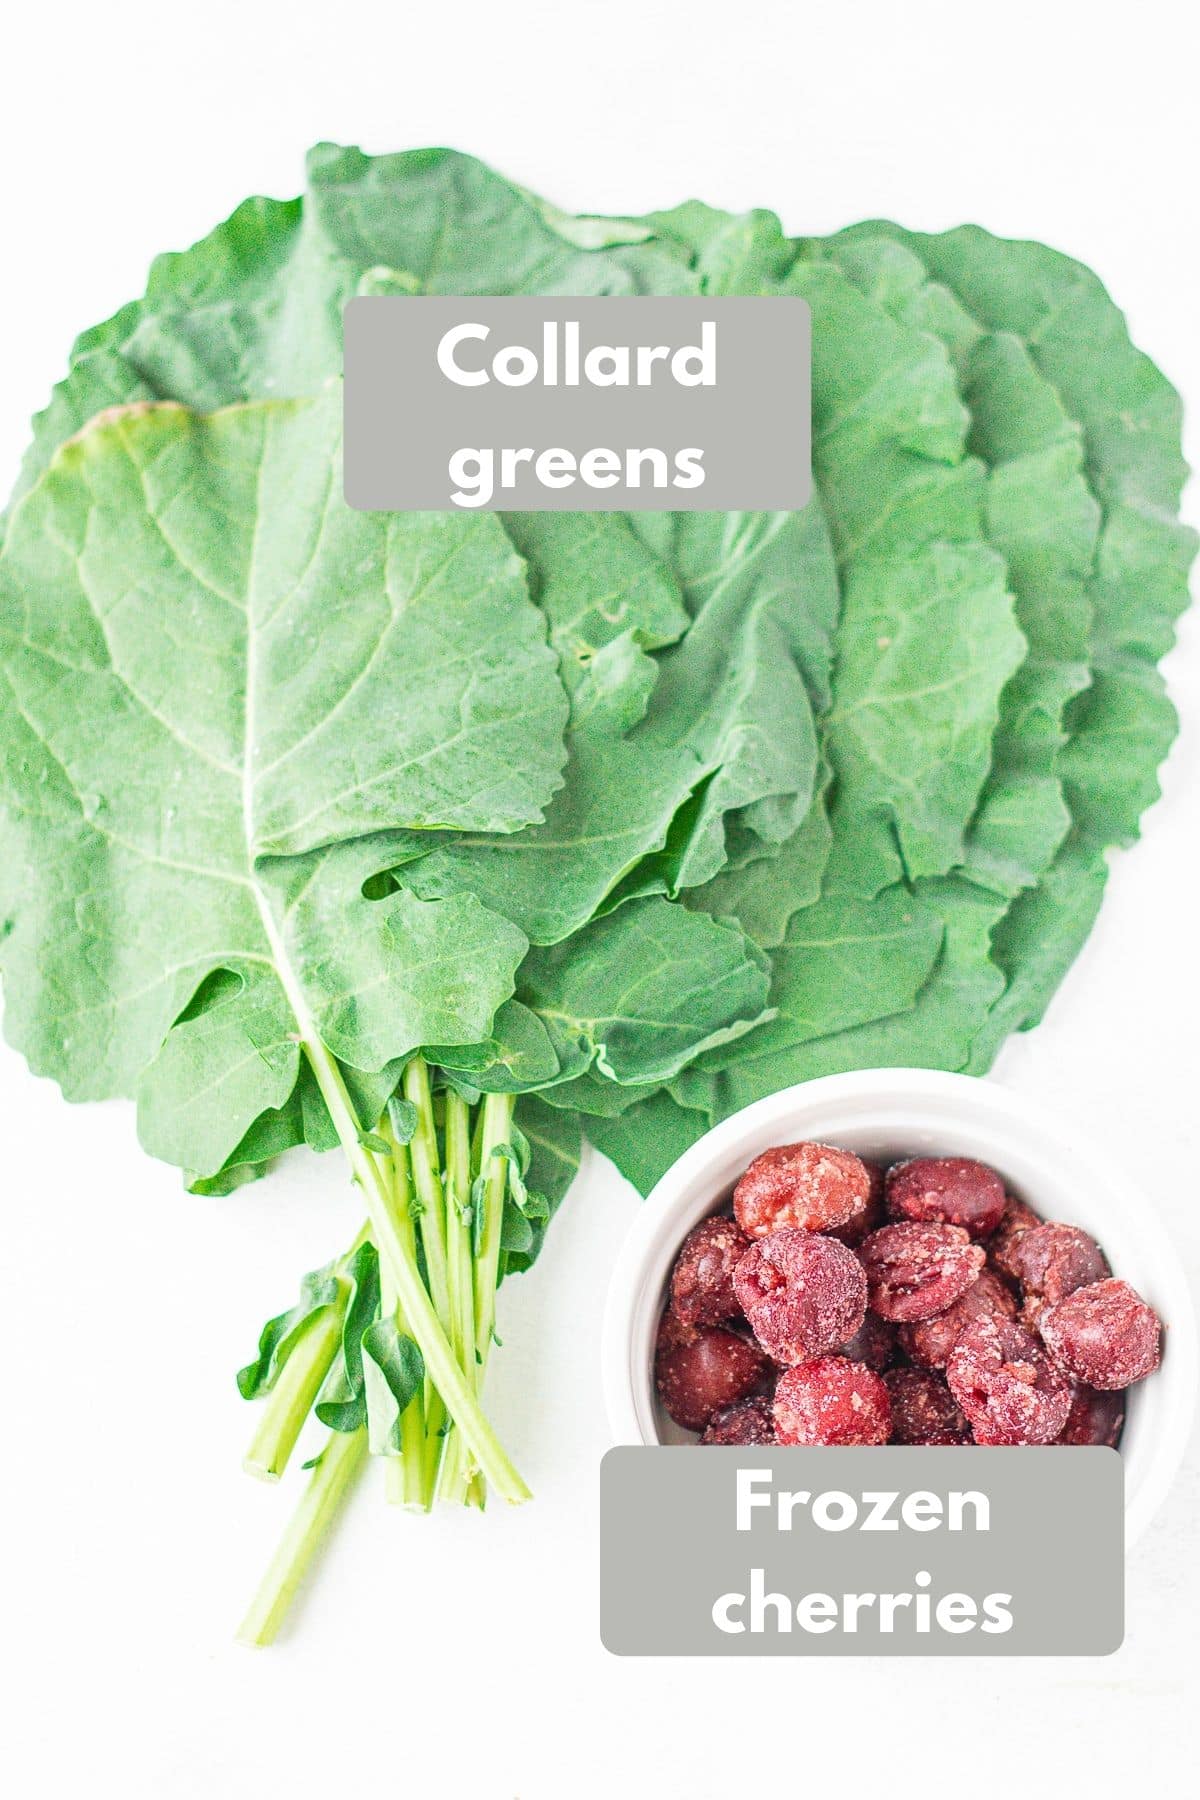 Collard green smoothie labeled ingredients